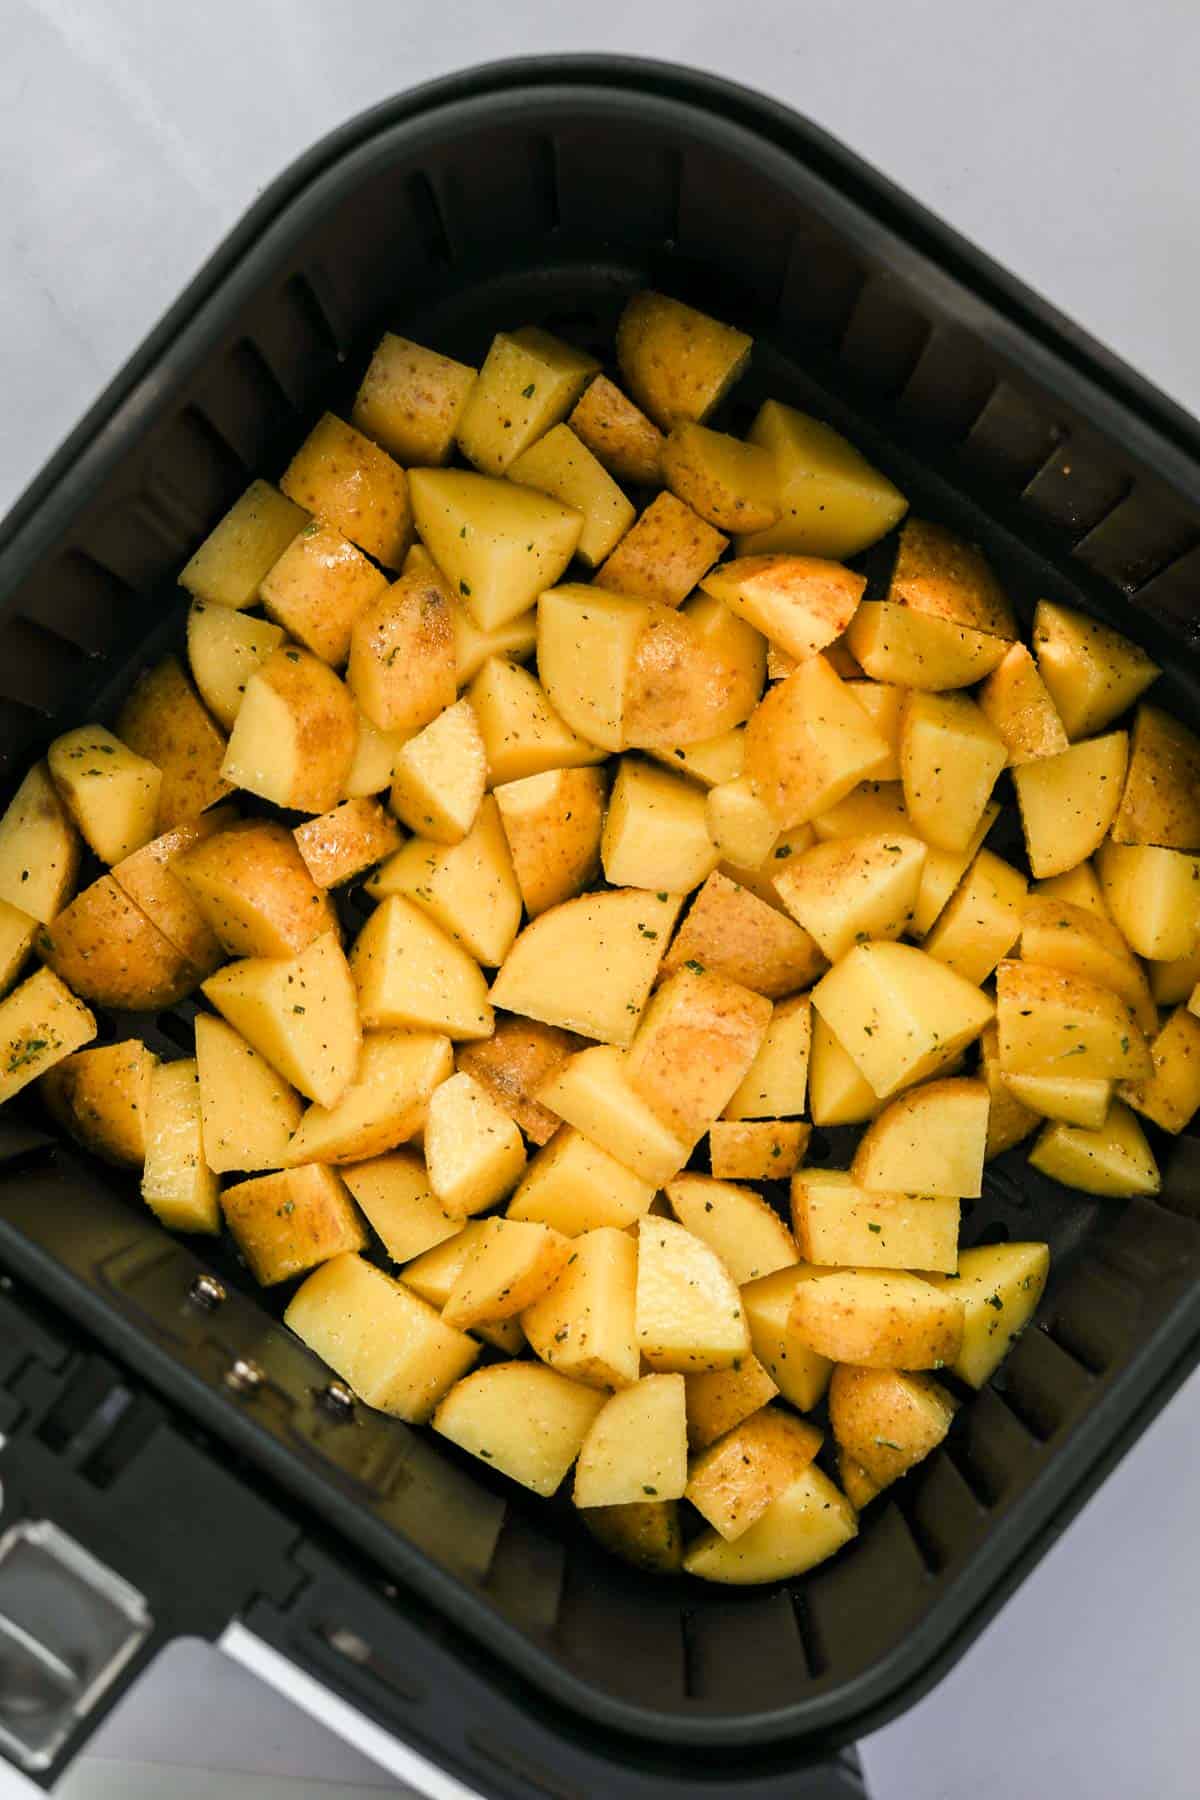 yukon gold potatoes in an air fryer basket.